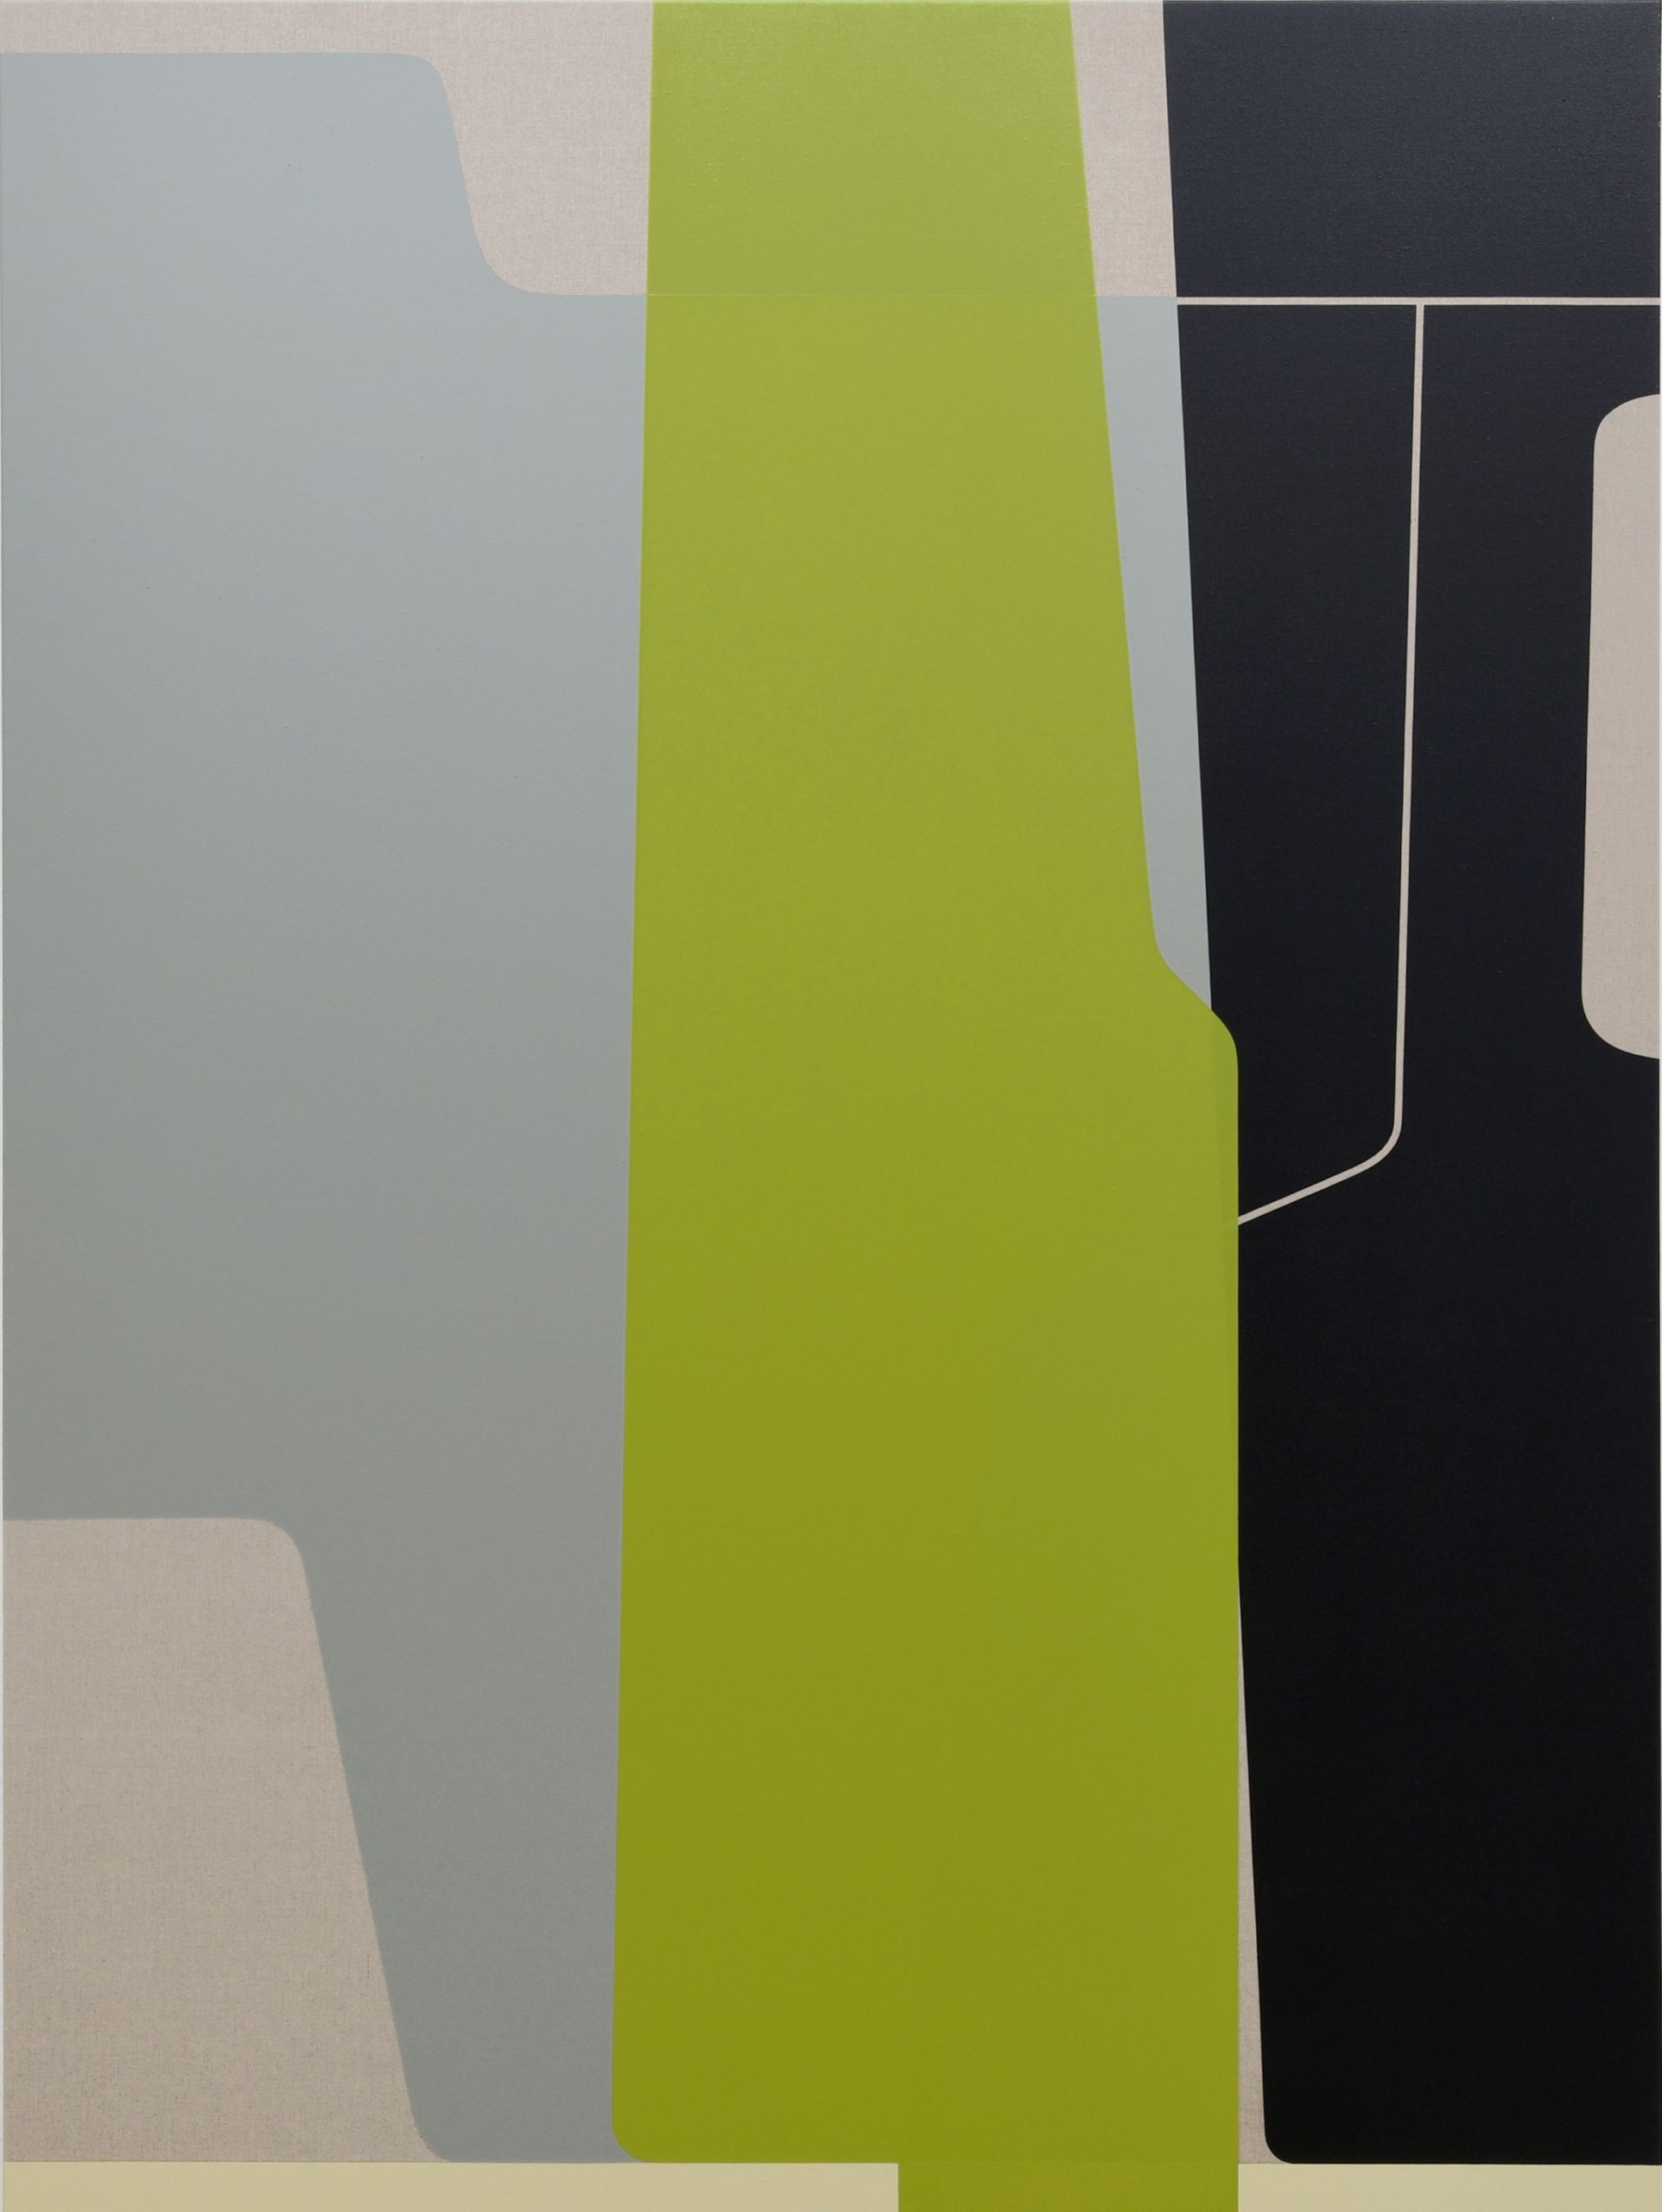 Matthew Browne 'Austice' vinyl tempera and oil on linen 190 x 140cm $19,000